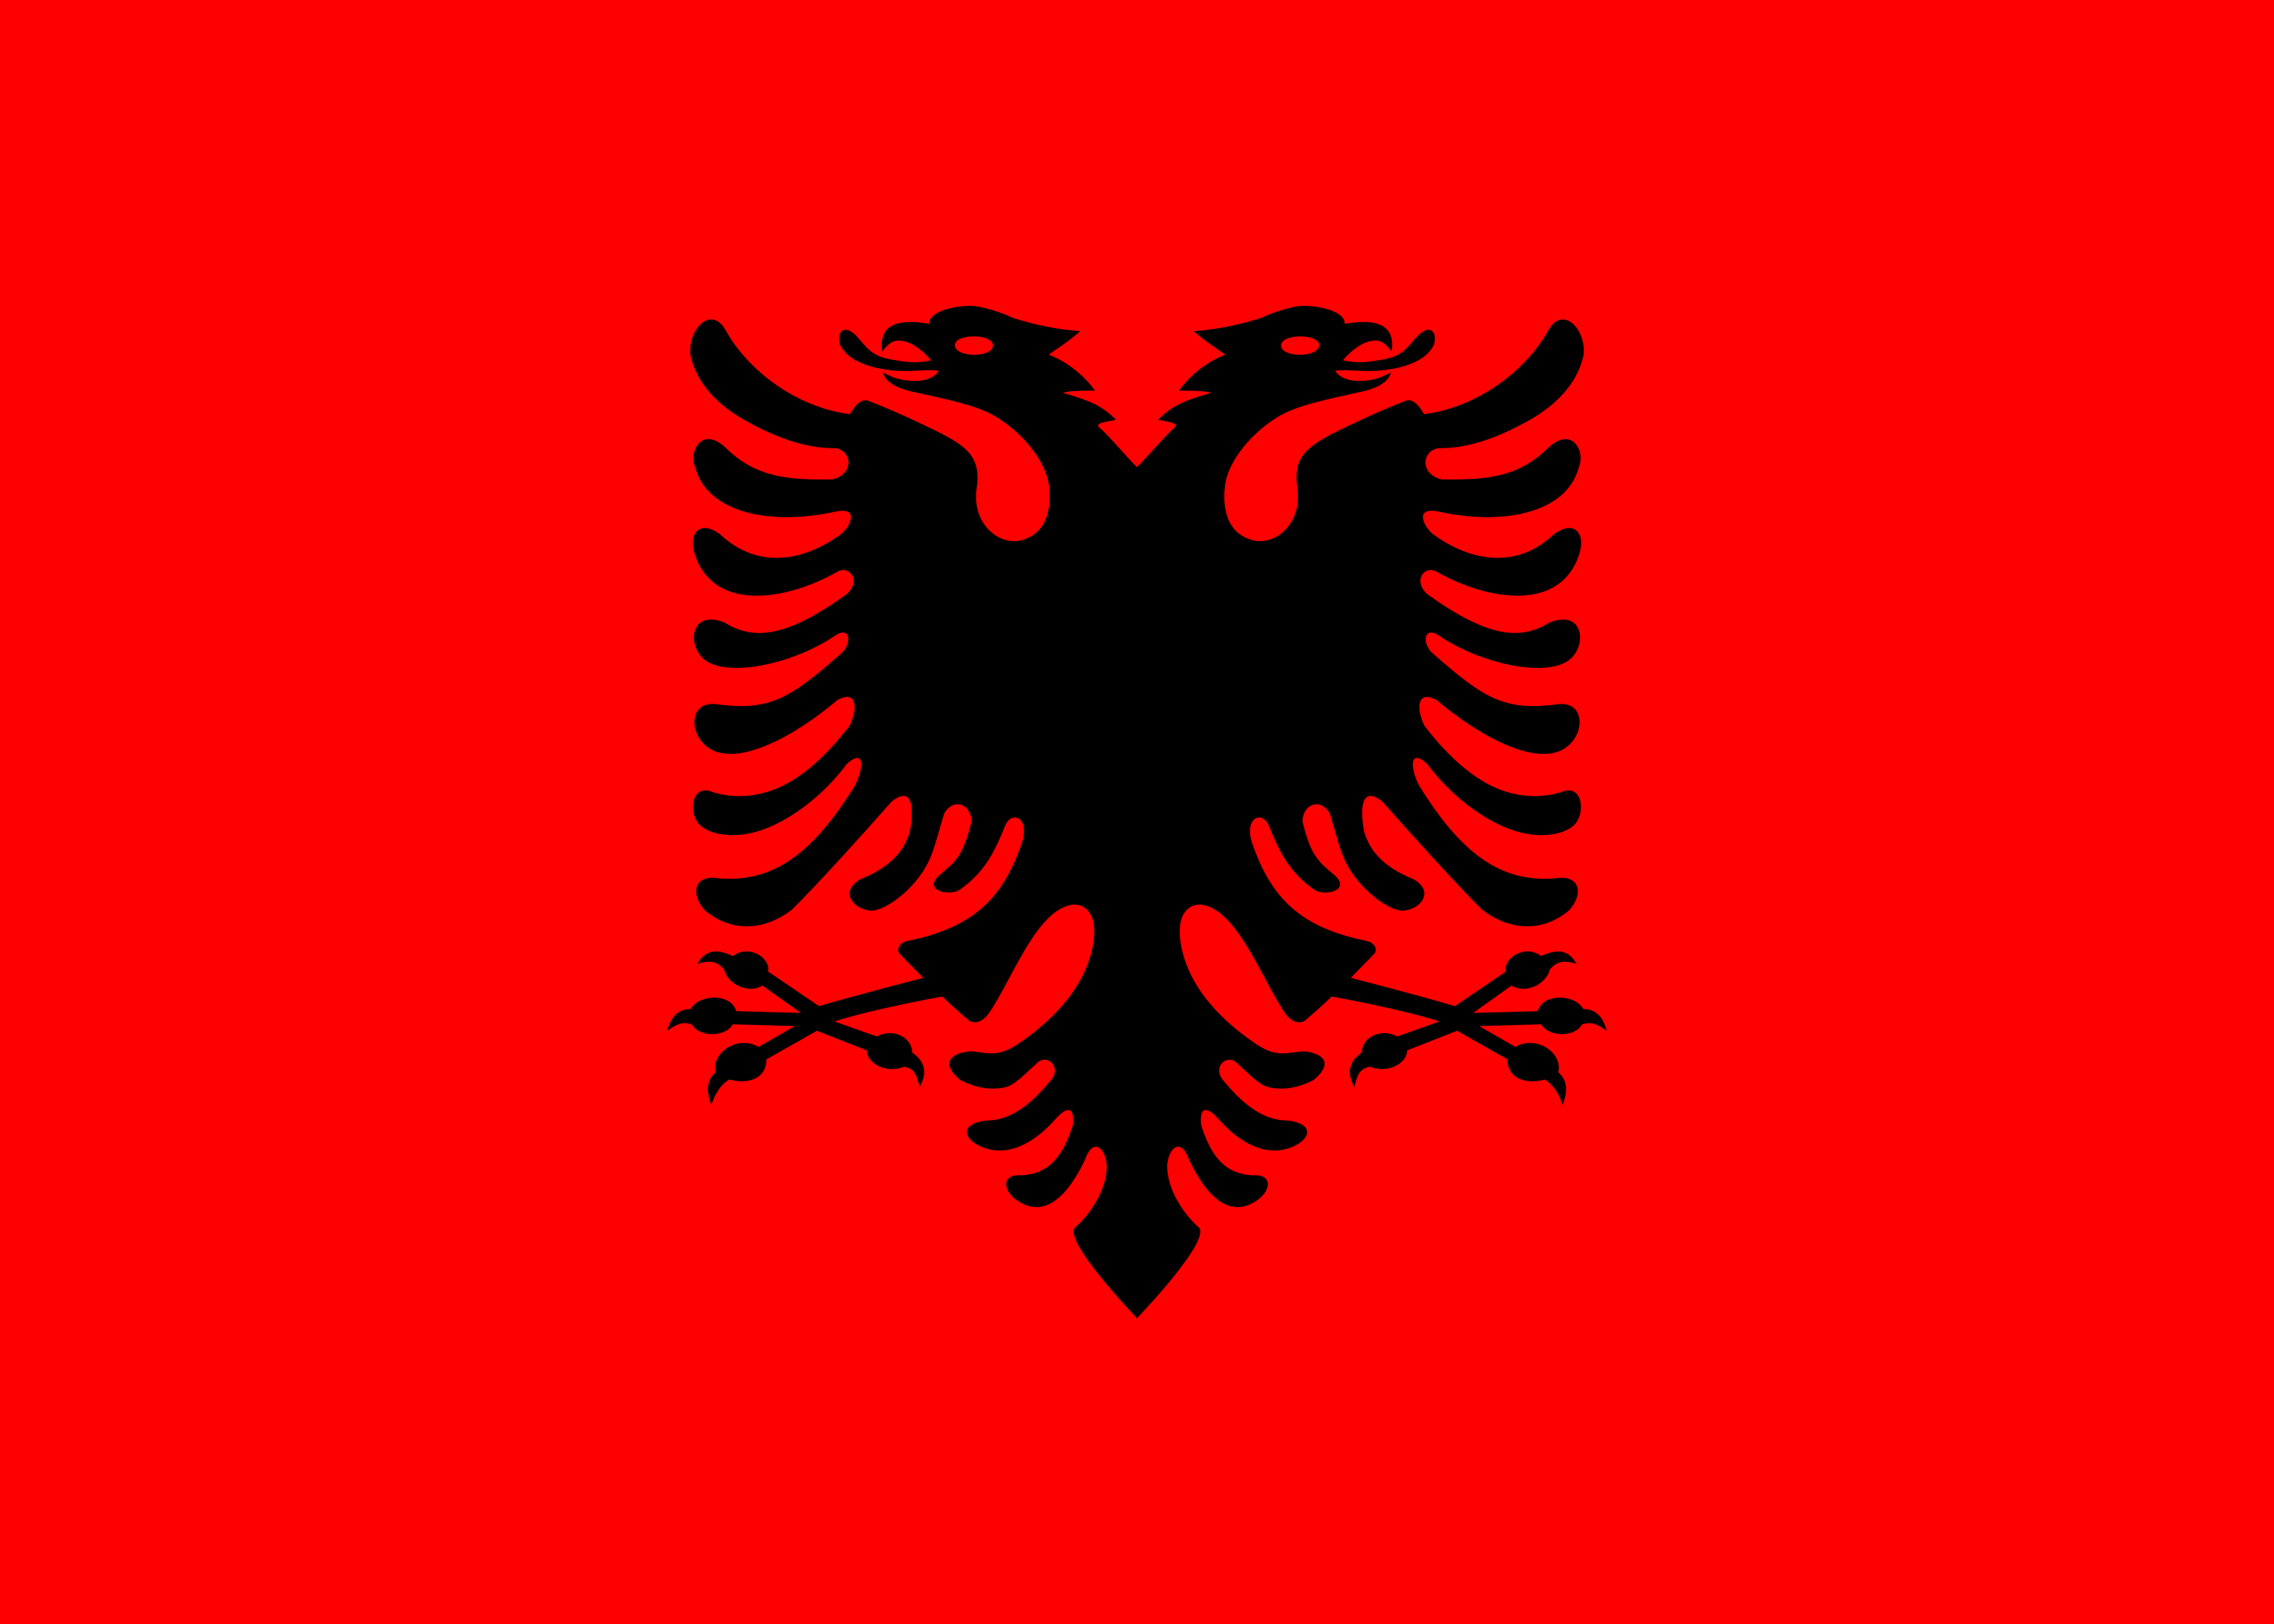 Free Albania Flag Documents: PDF, DOC, DOCX, HTML & More!